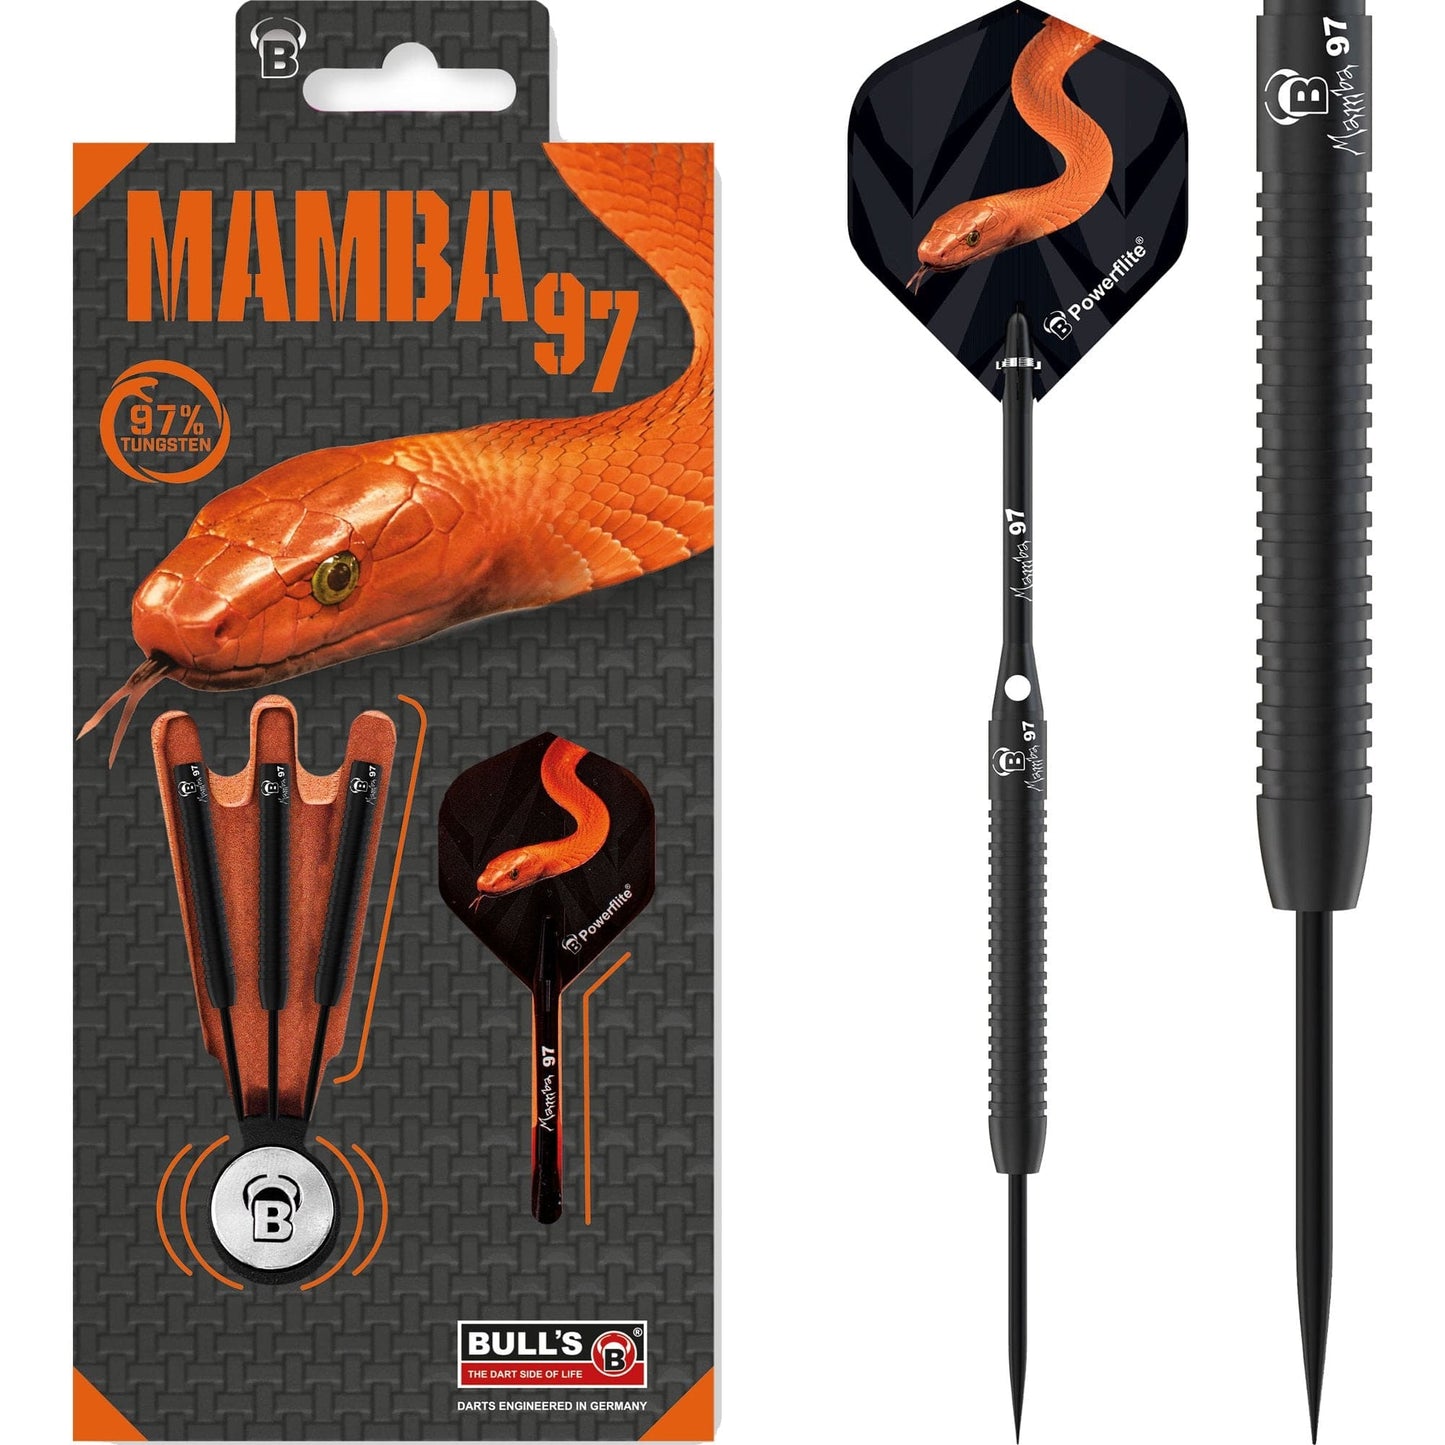 BULL'S Mamba 97 Darts - Steel Tip - M2 - Black Titanium 22g